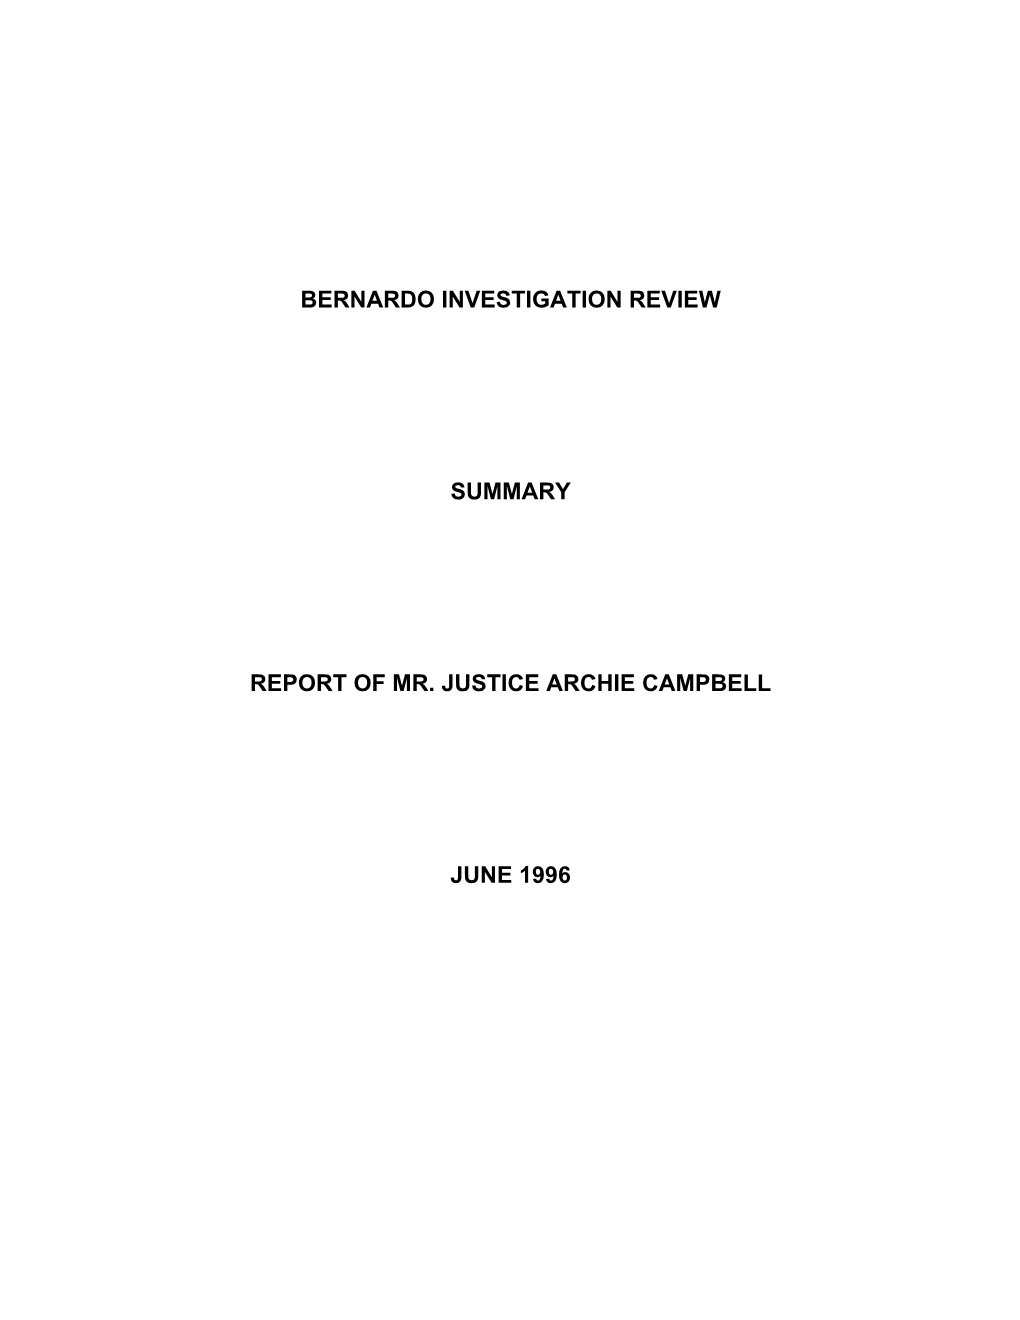 Bernardo Investigation Review, Summary, Report of Mr. Justice